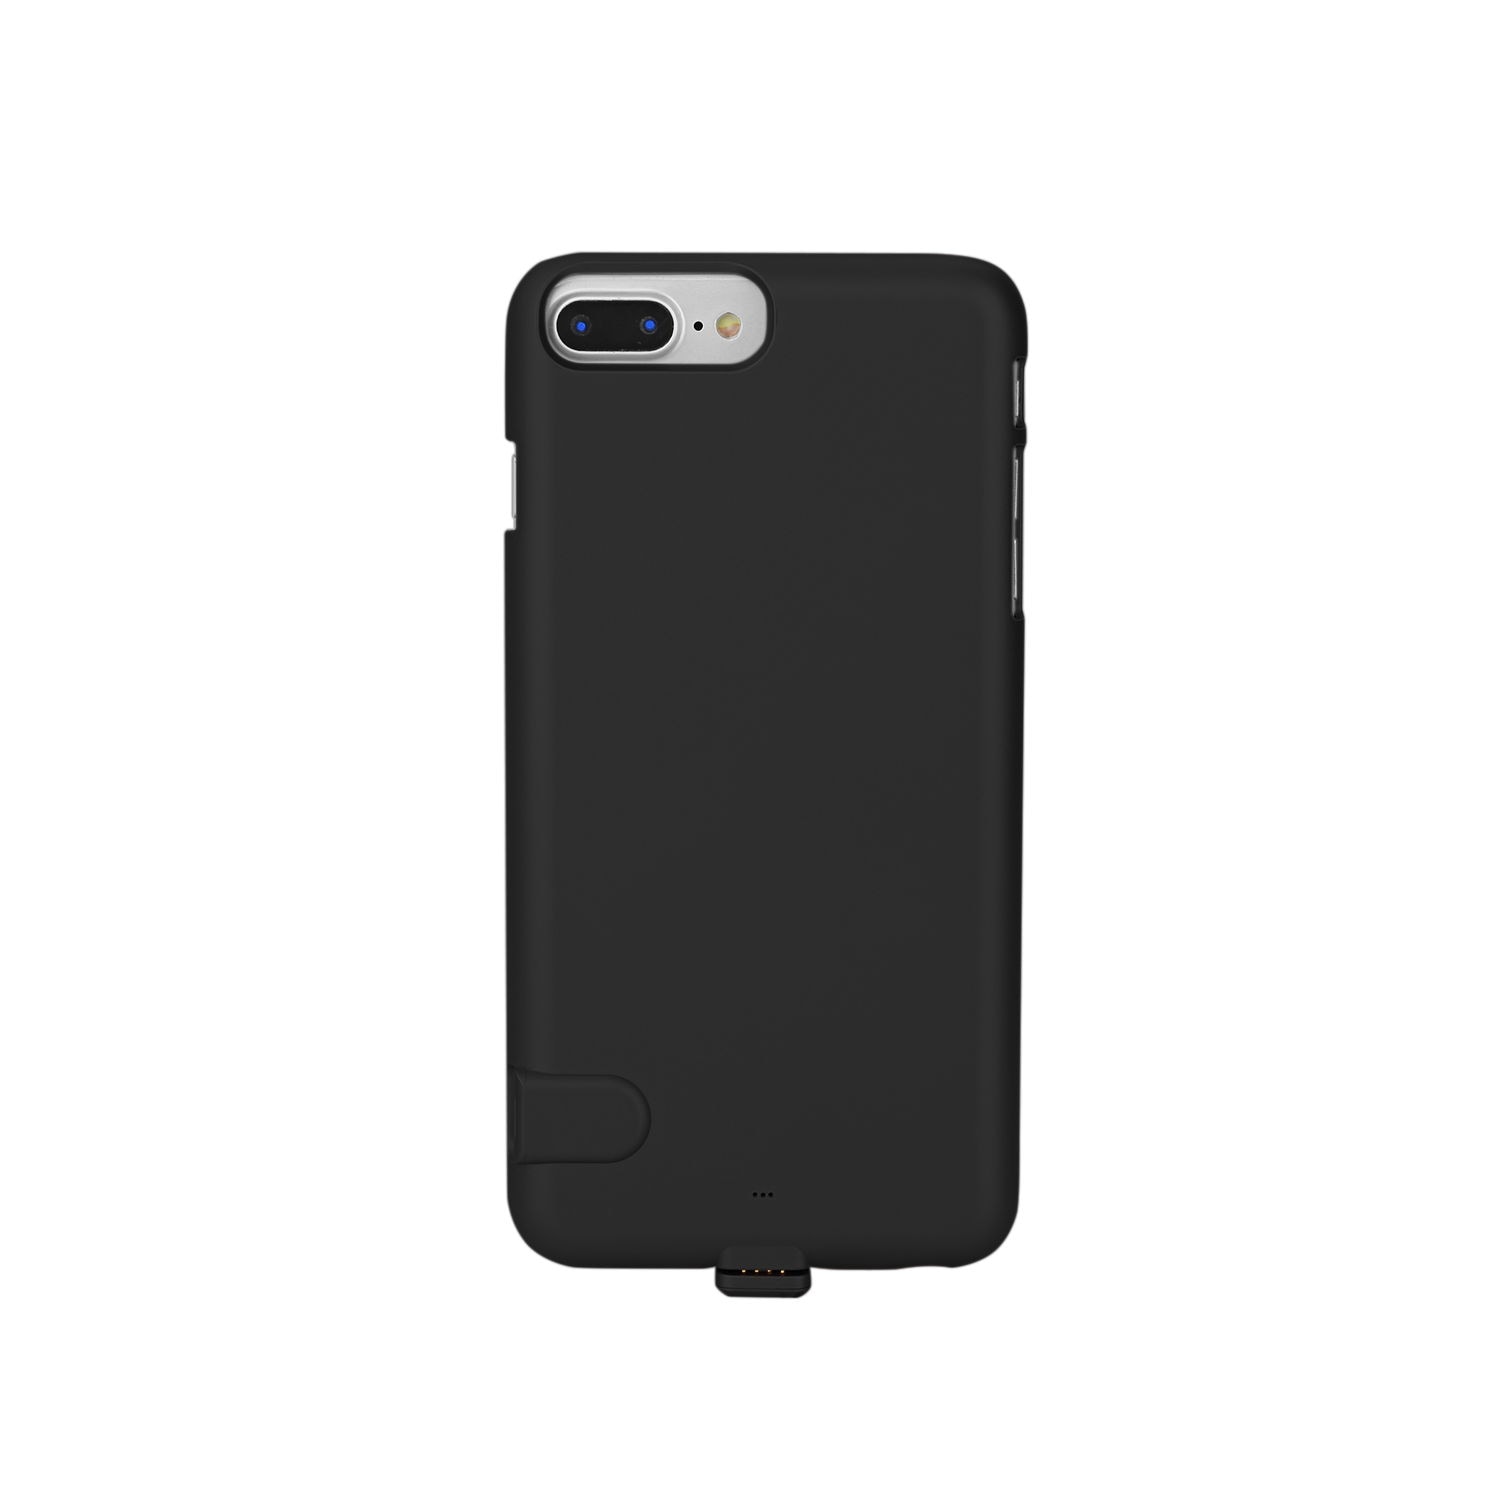 Batteriskall / Batterifutteral iPhone 7 Plus - Svart